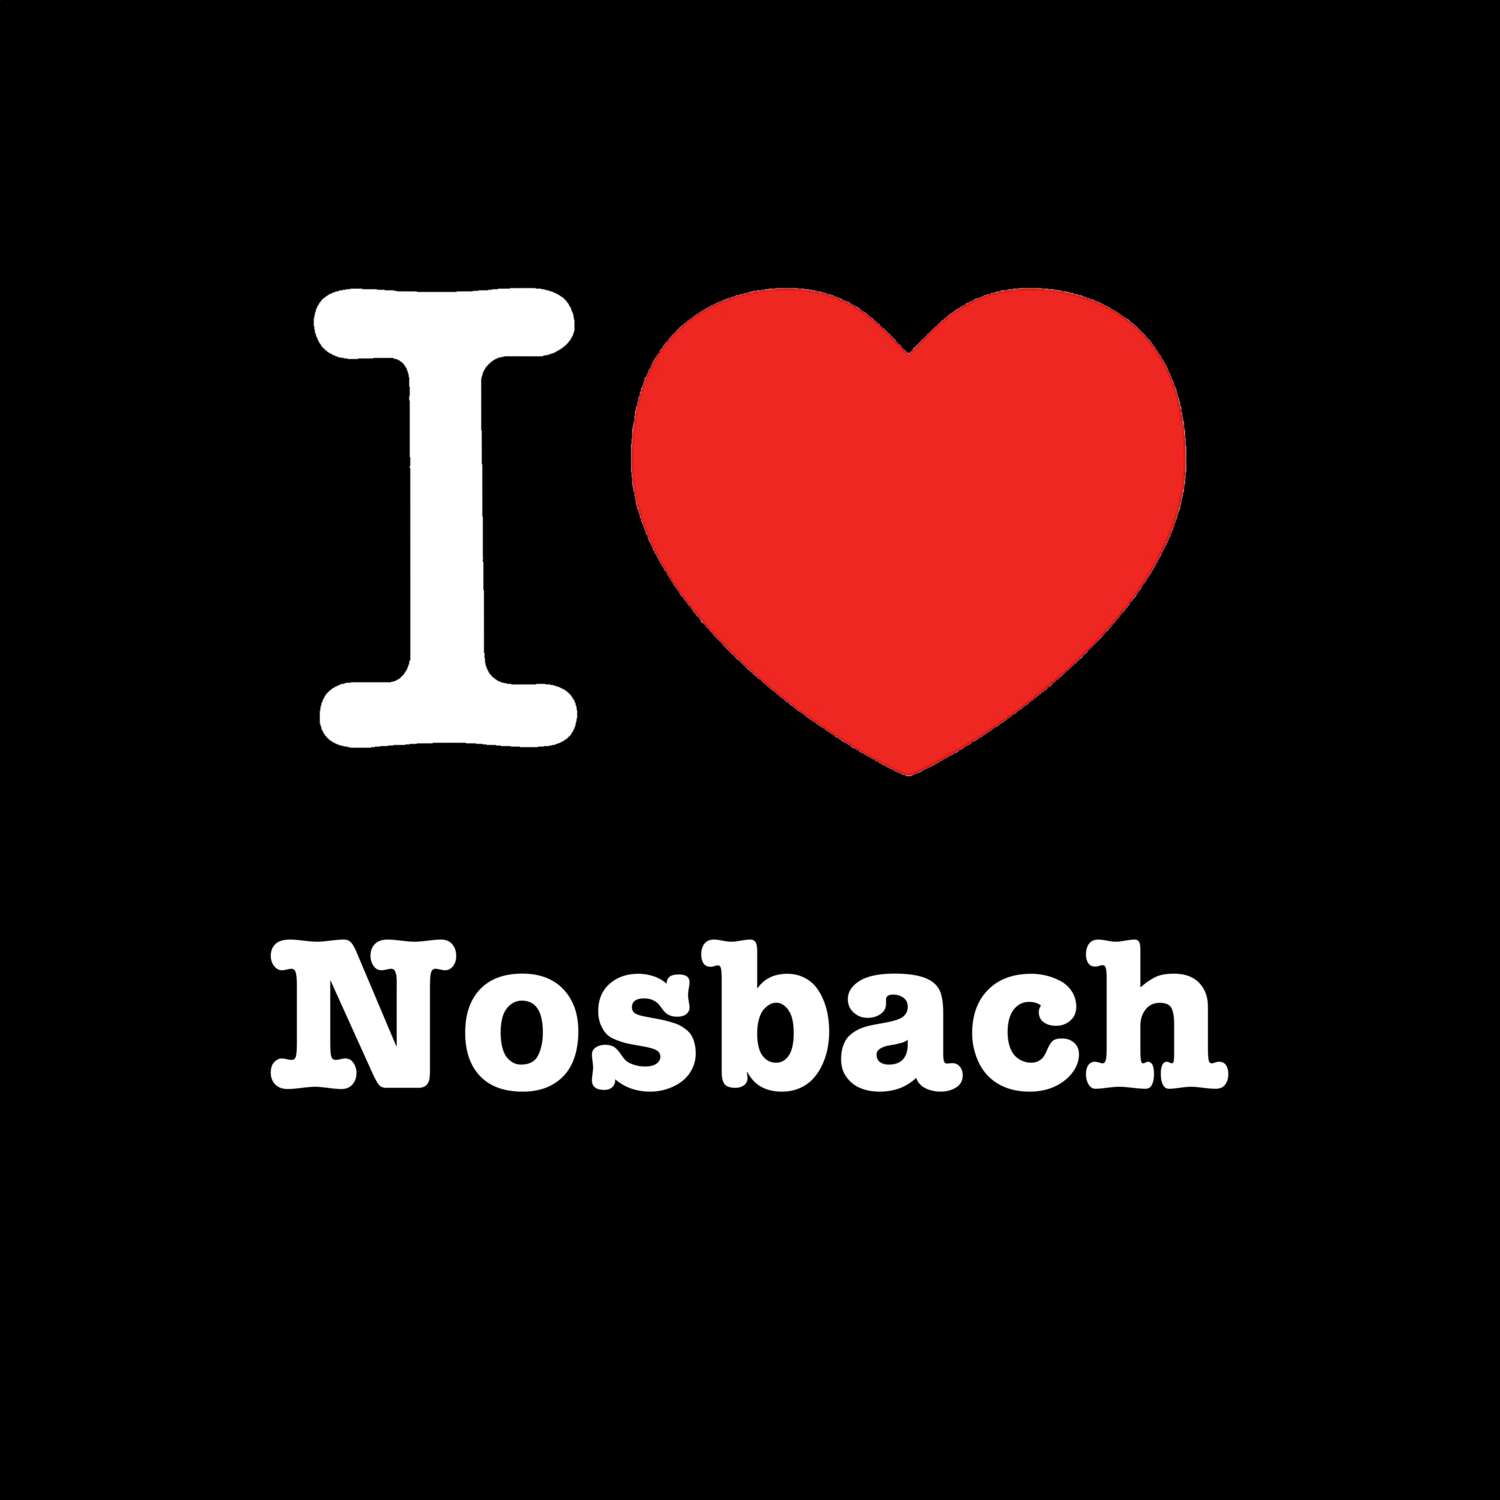 Nosbach T-Shirt »I love«